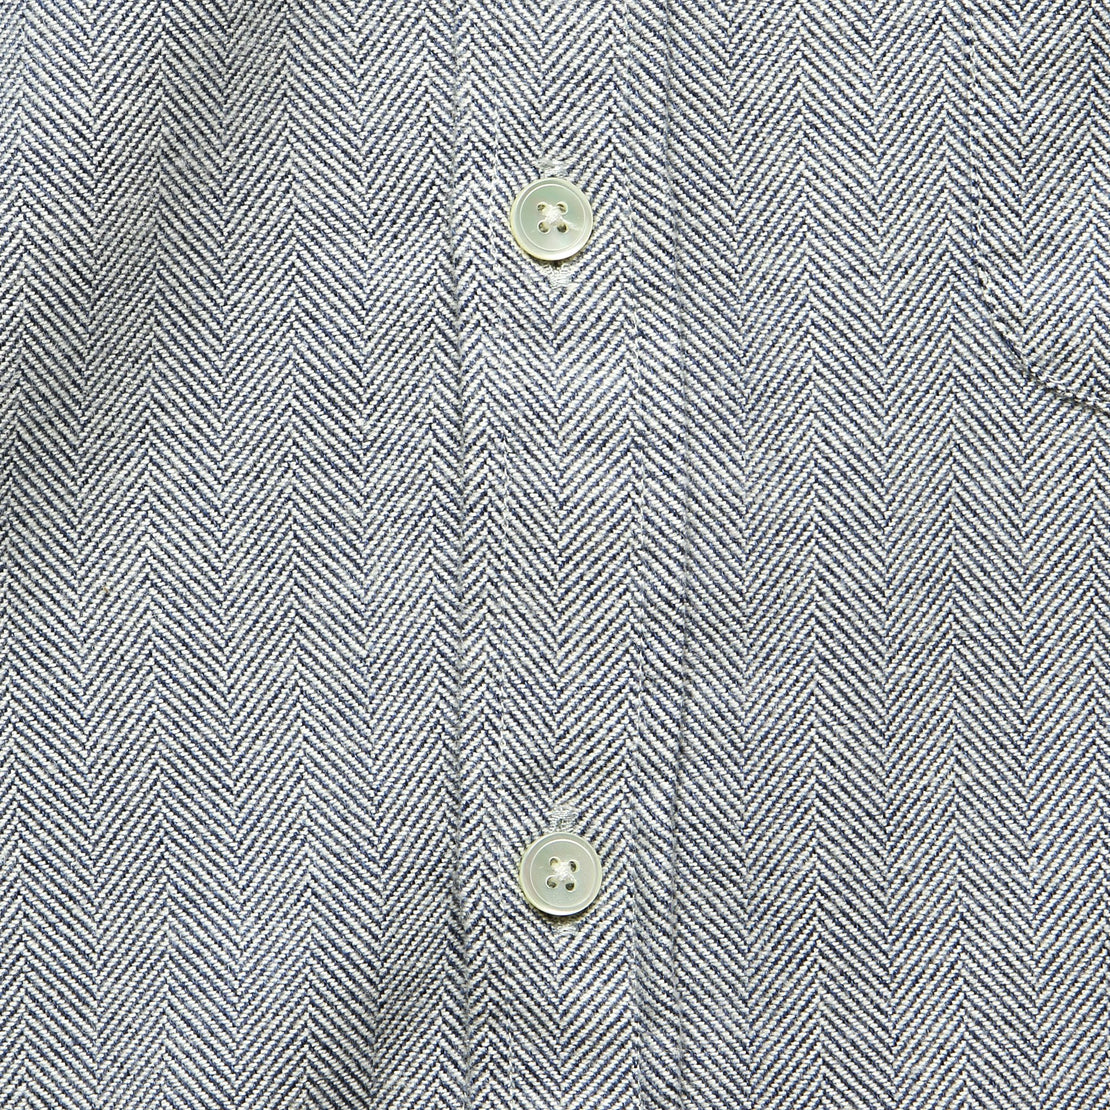 Espiga Shirt - Grey - Portuguese Flannel - STAG Provisions - Tops - L/S Woven - Solid